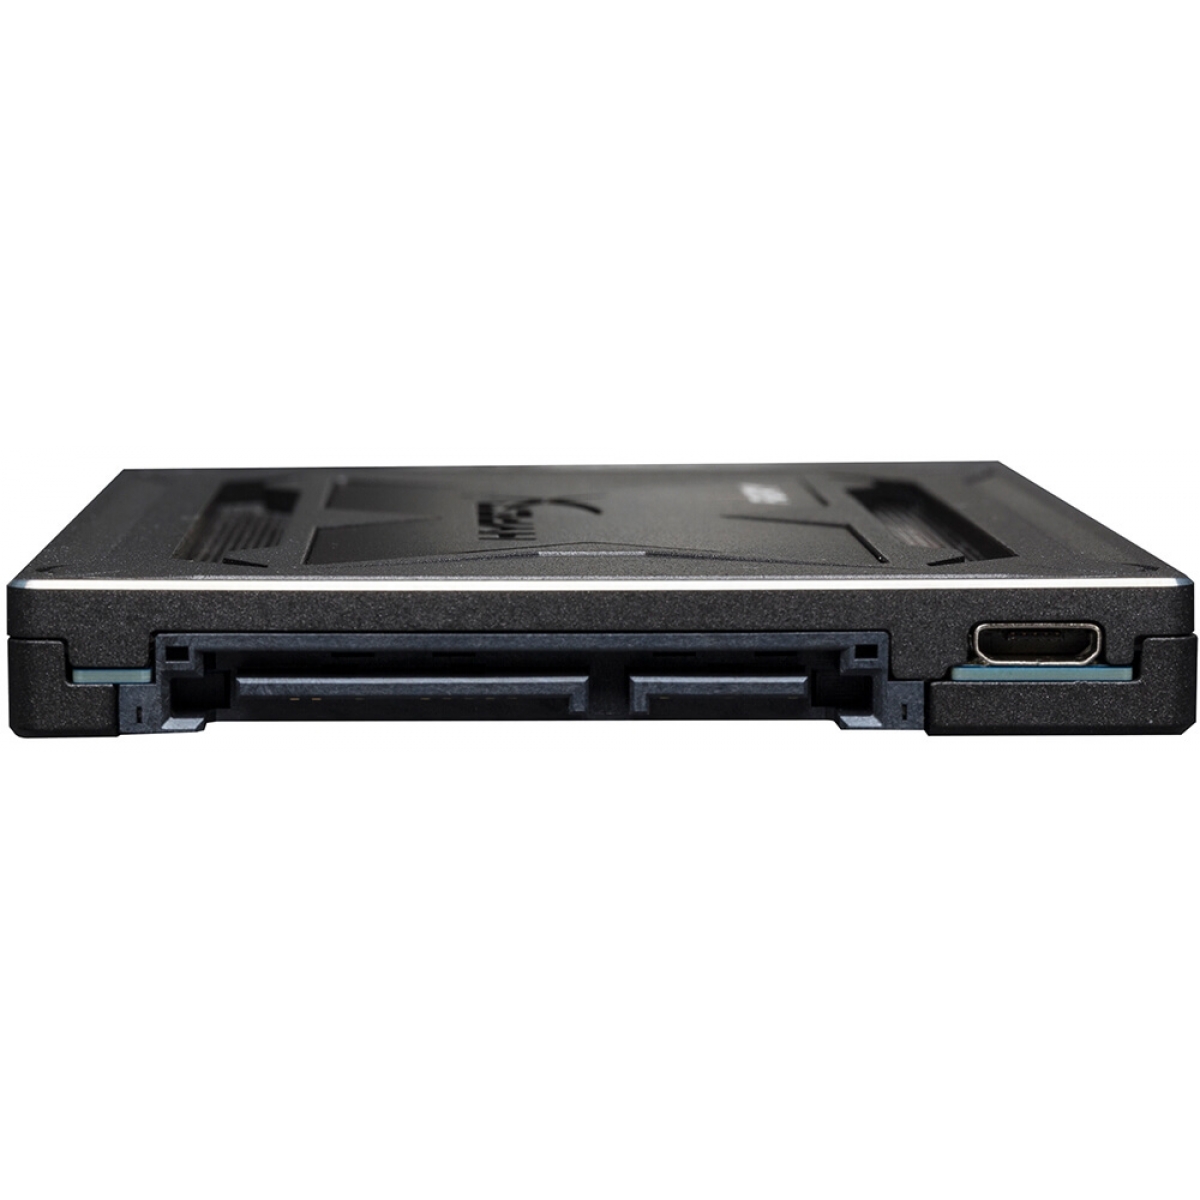 SSD Kingston Hyperx Fury RGB, 480GB, Sata III, Leitura 550MBs e Gravação 480MBs, SHFR200/480G